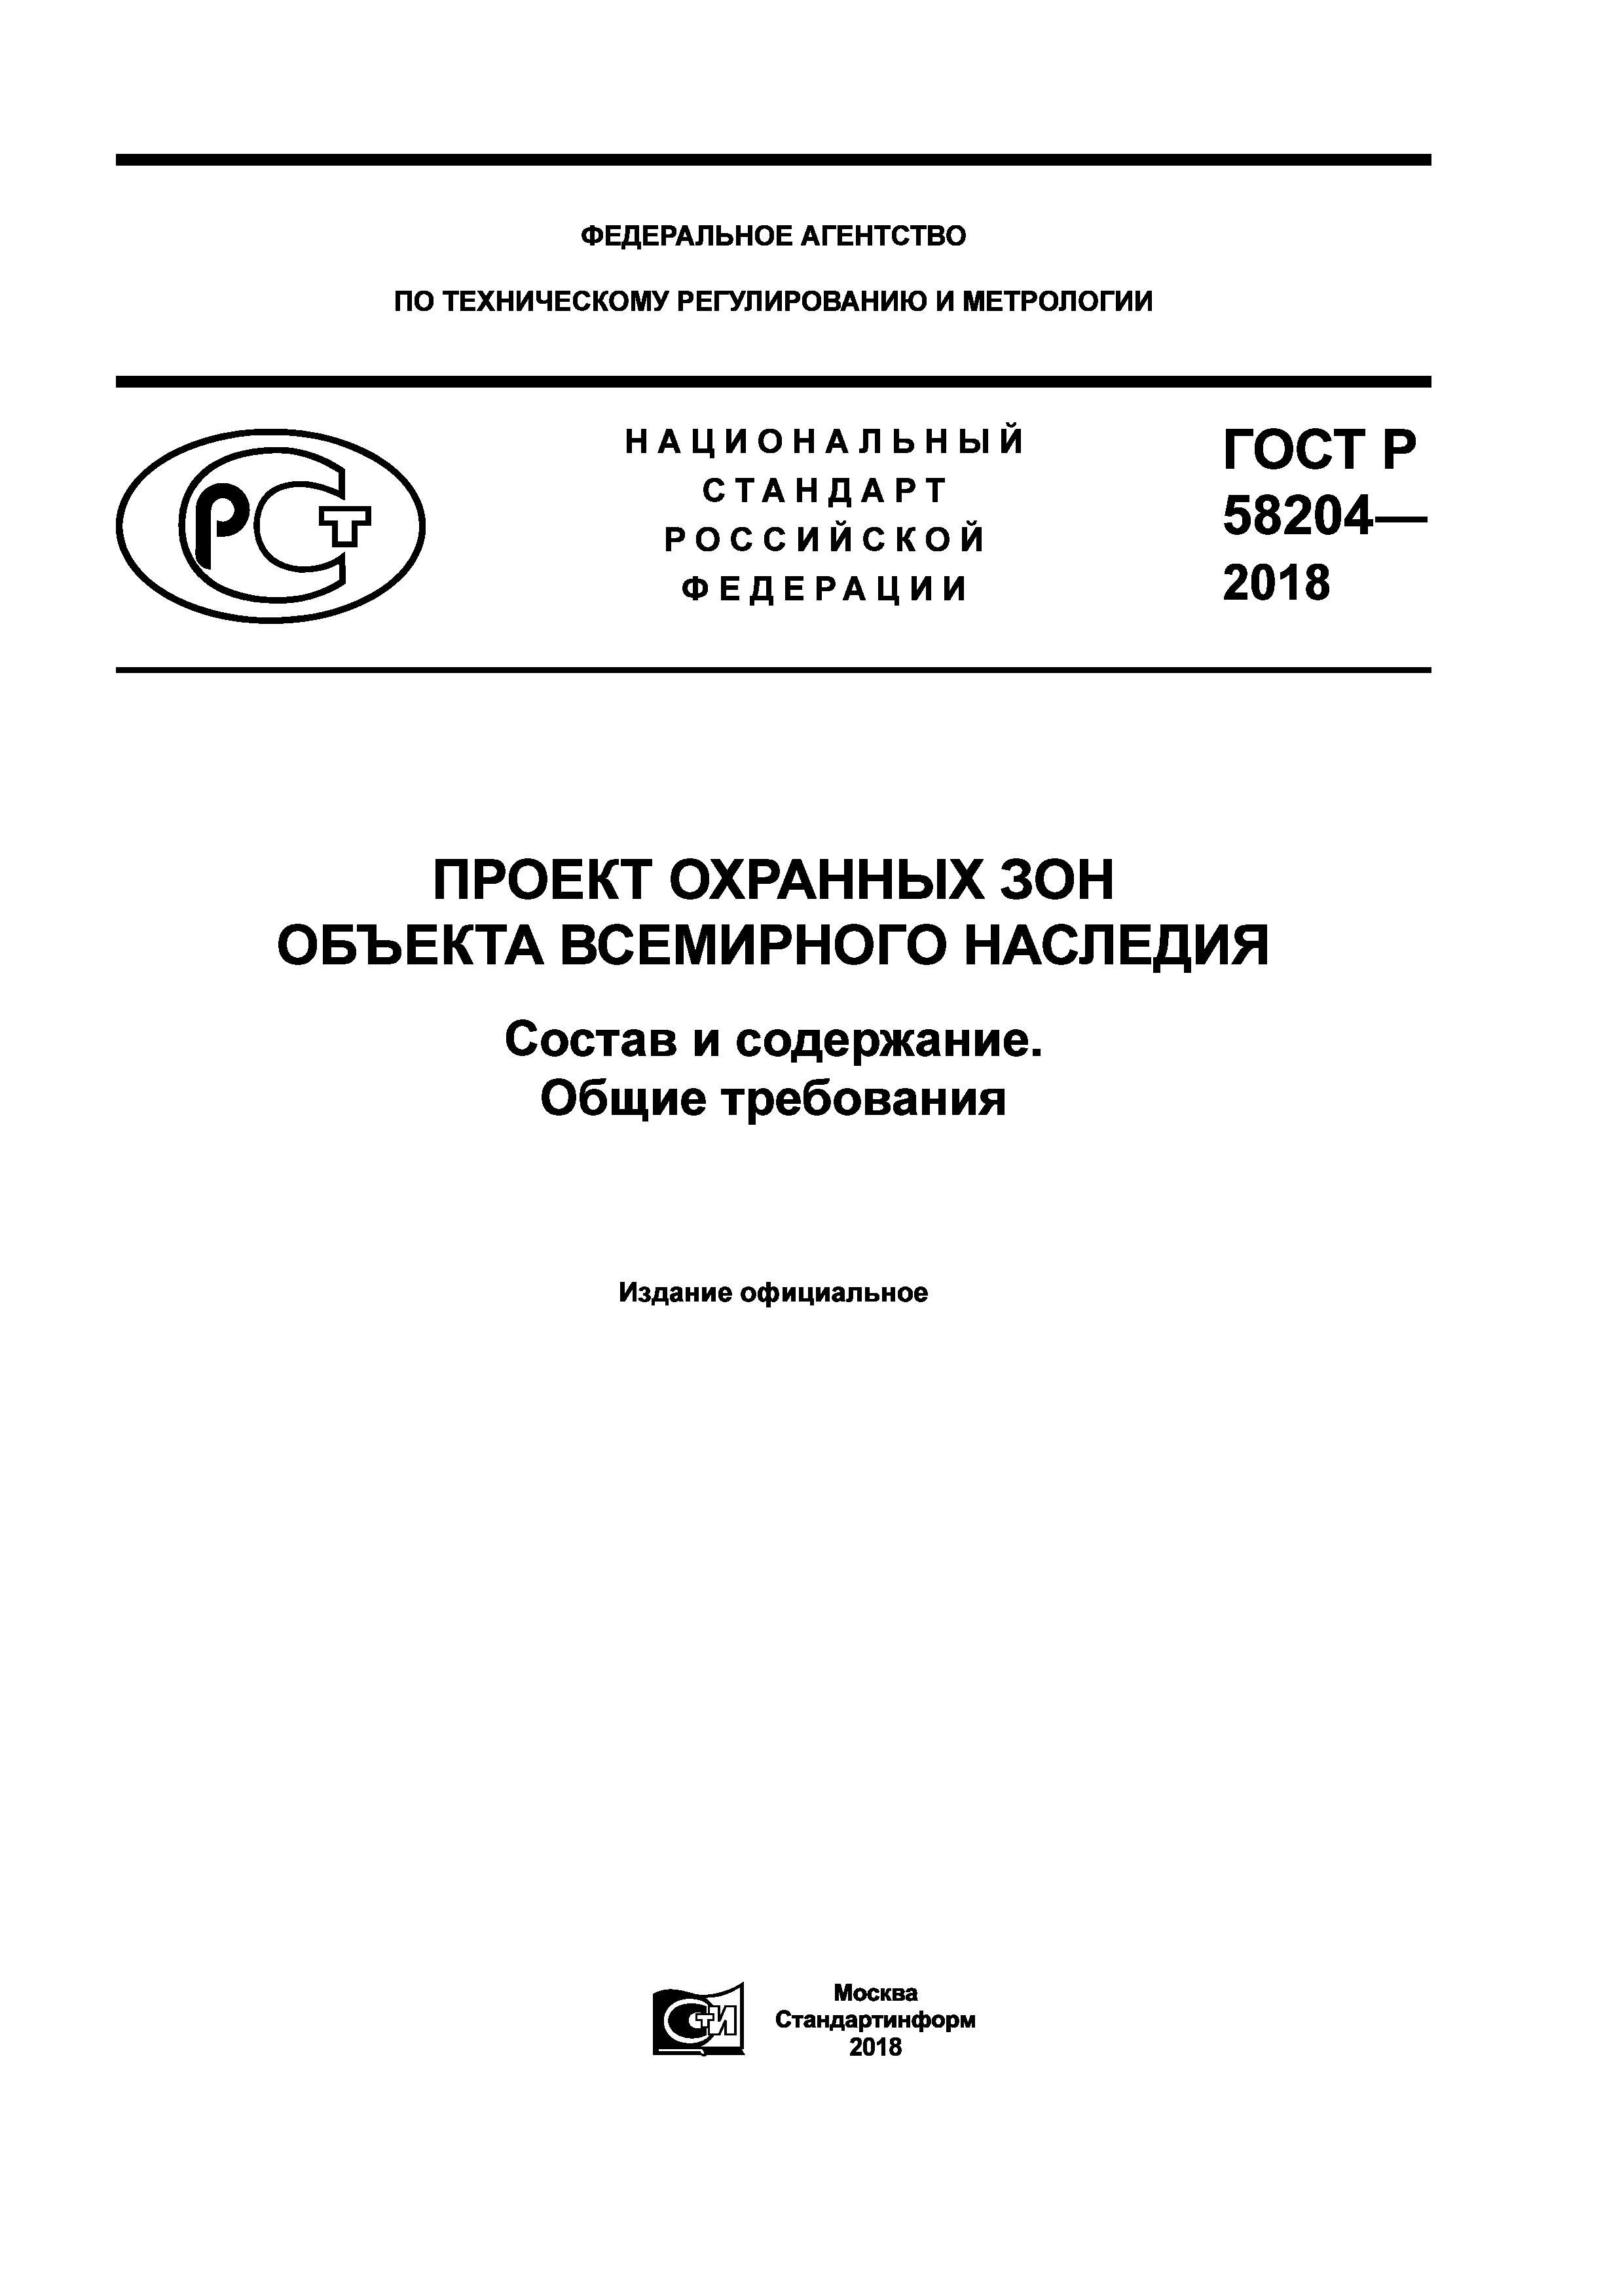 ГОСТ Р 58204-2018